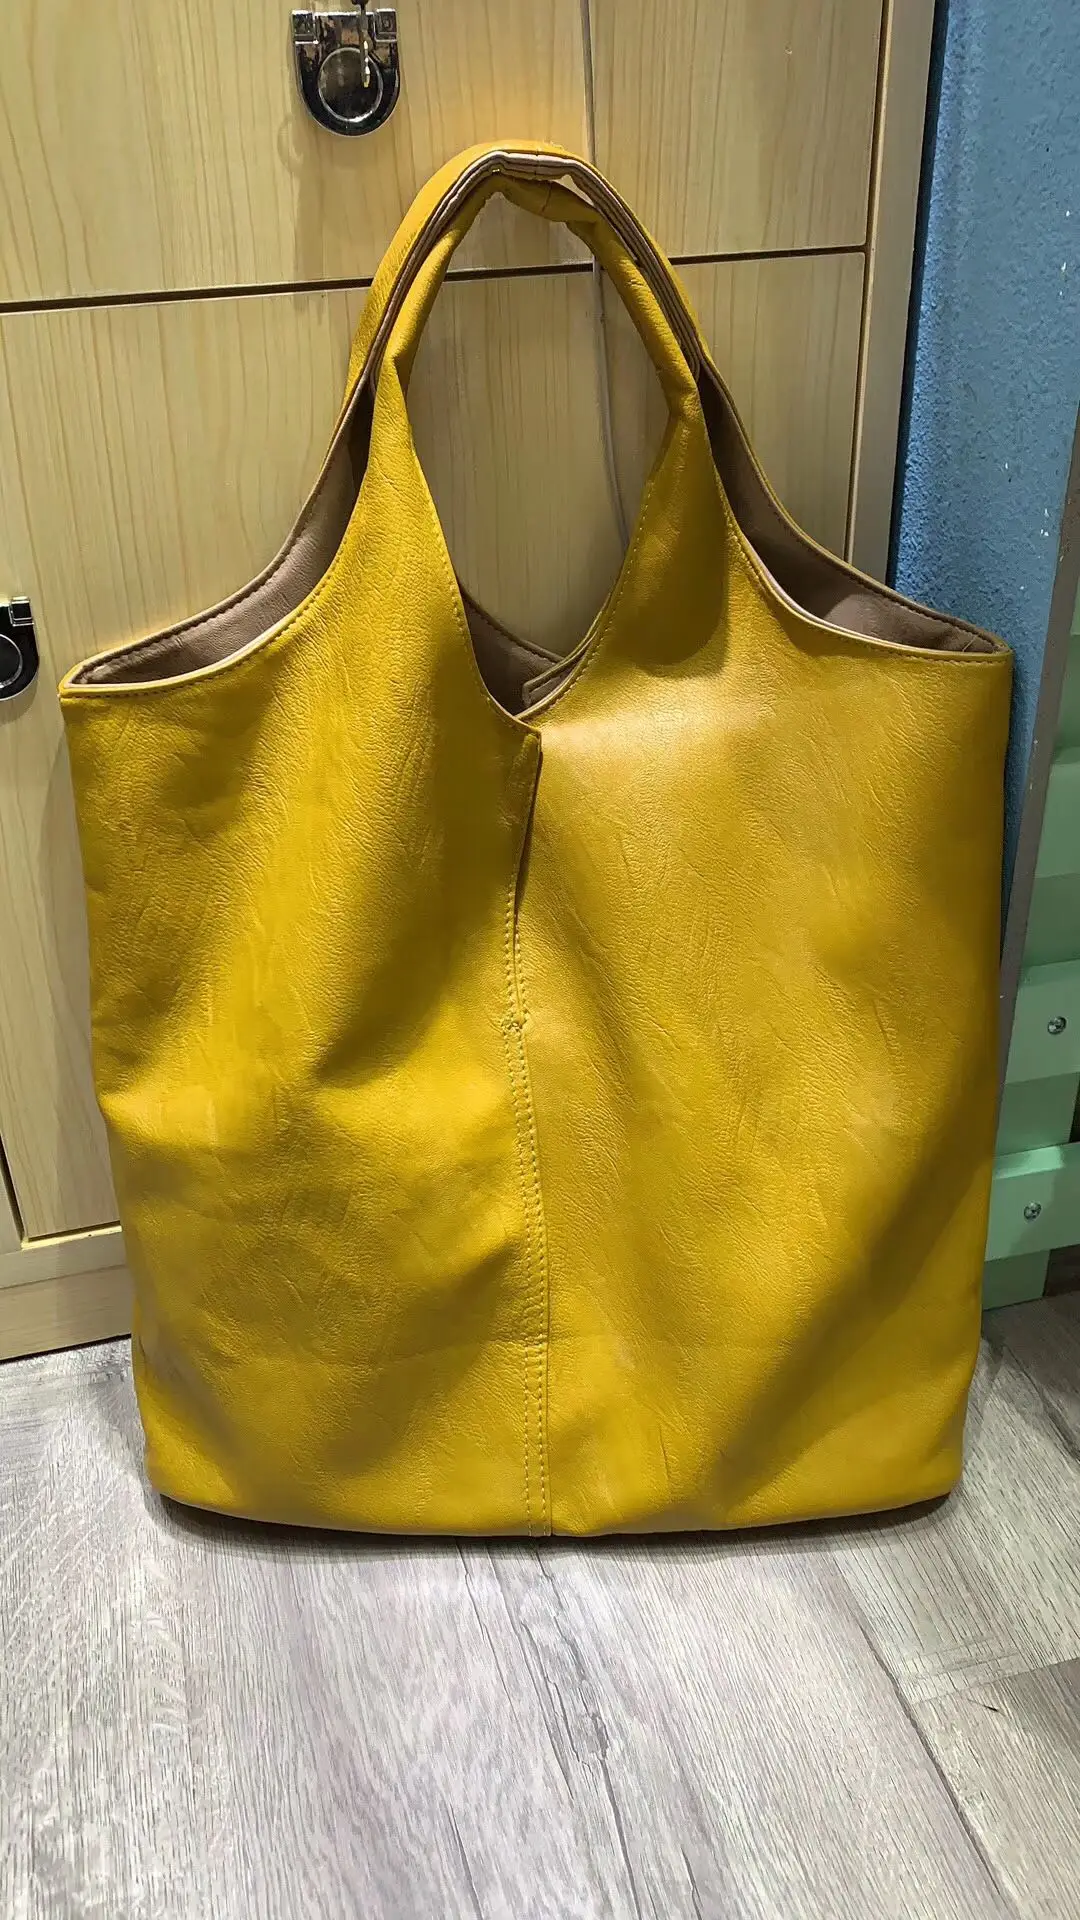 Women's Vintage Genuine Leather Tote Hobo Shoulder Bag Handbag Large A4 College School Work Business Bag For Female Double-sided images - 6